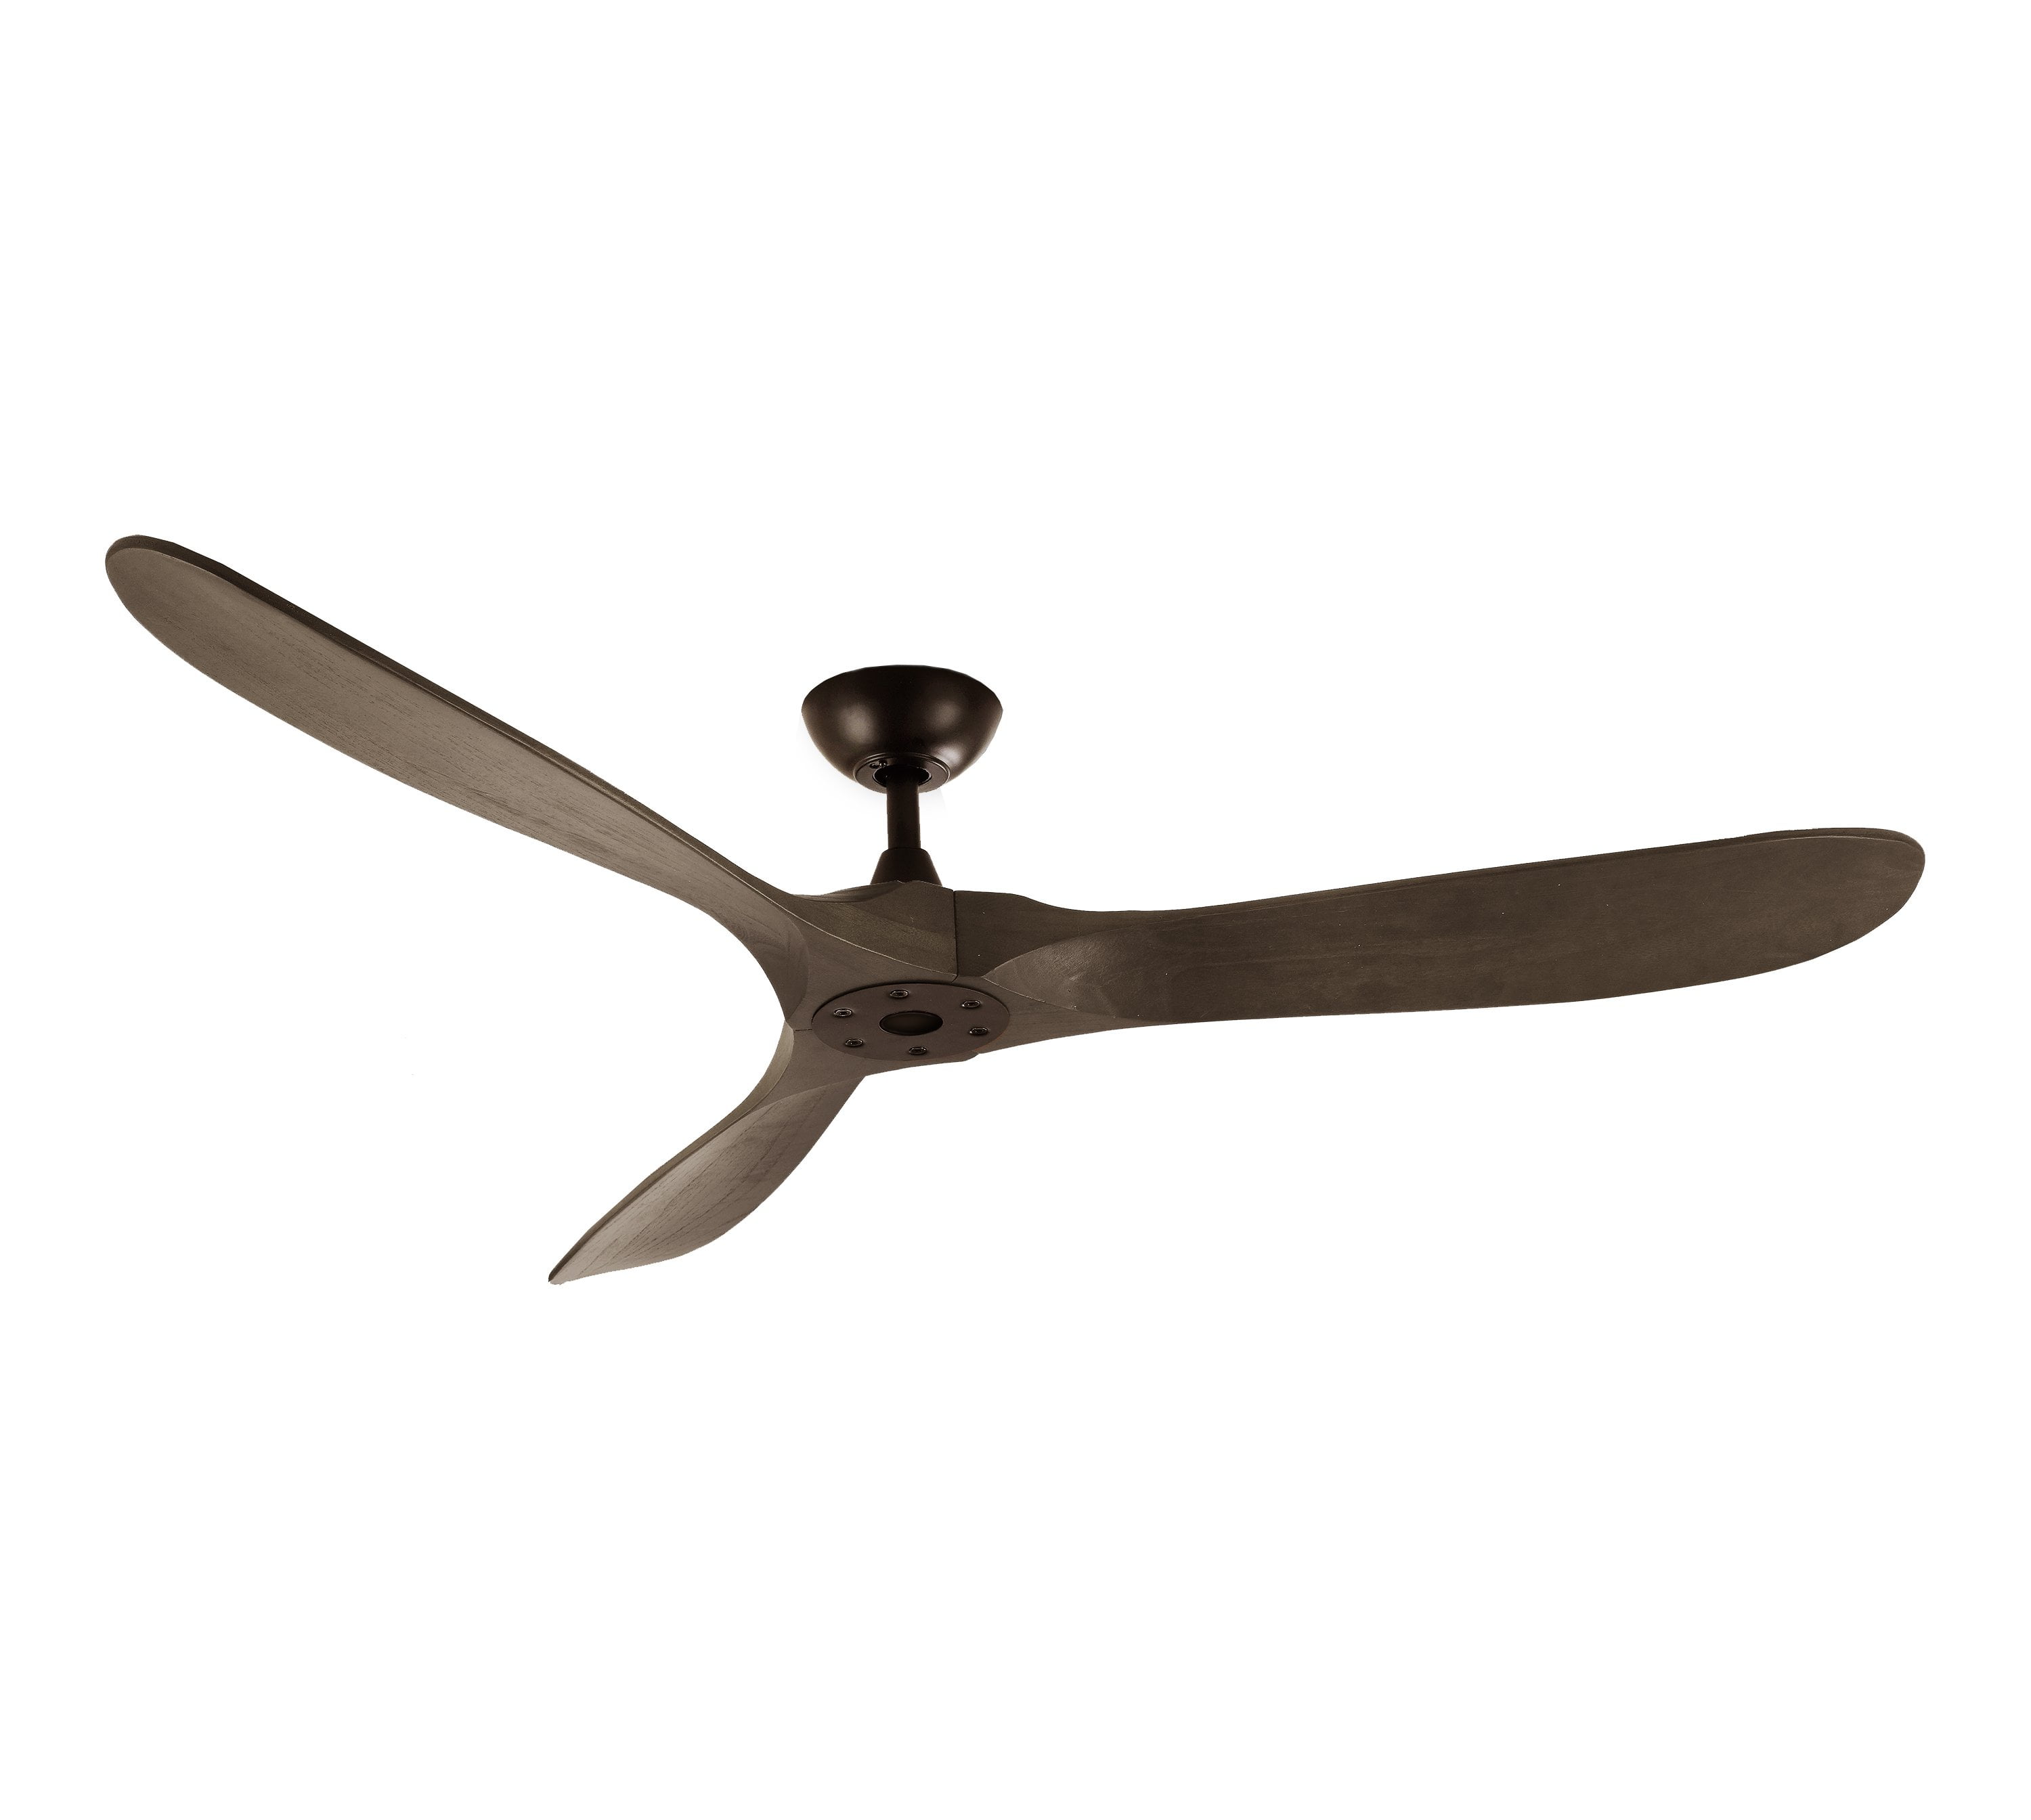 Indoor Outdoor Ceiling Fan Vintage, Wooden Airplane Propeller Ceiling Fan